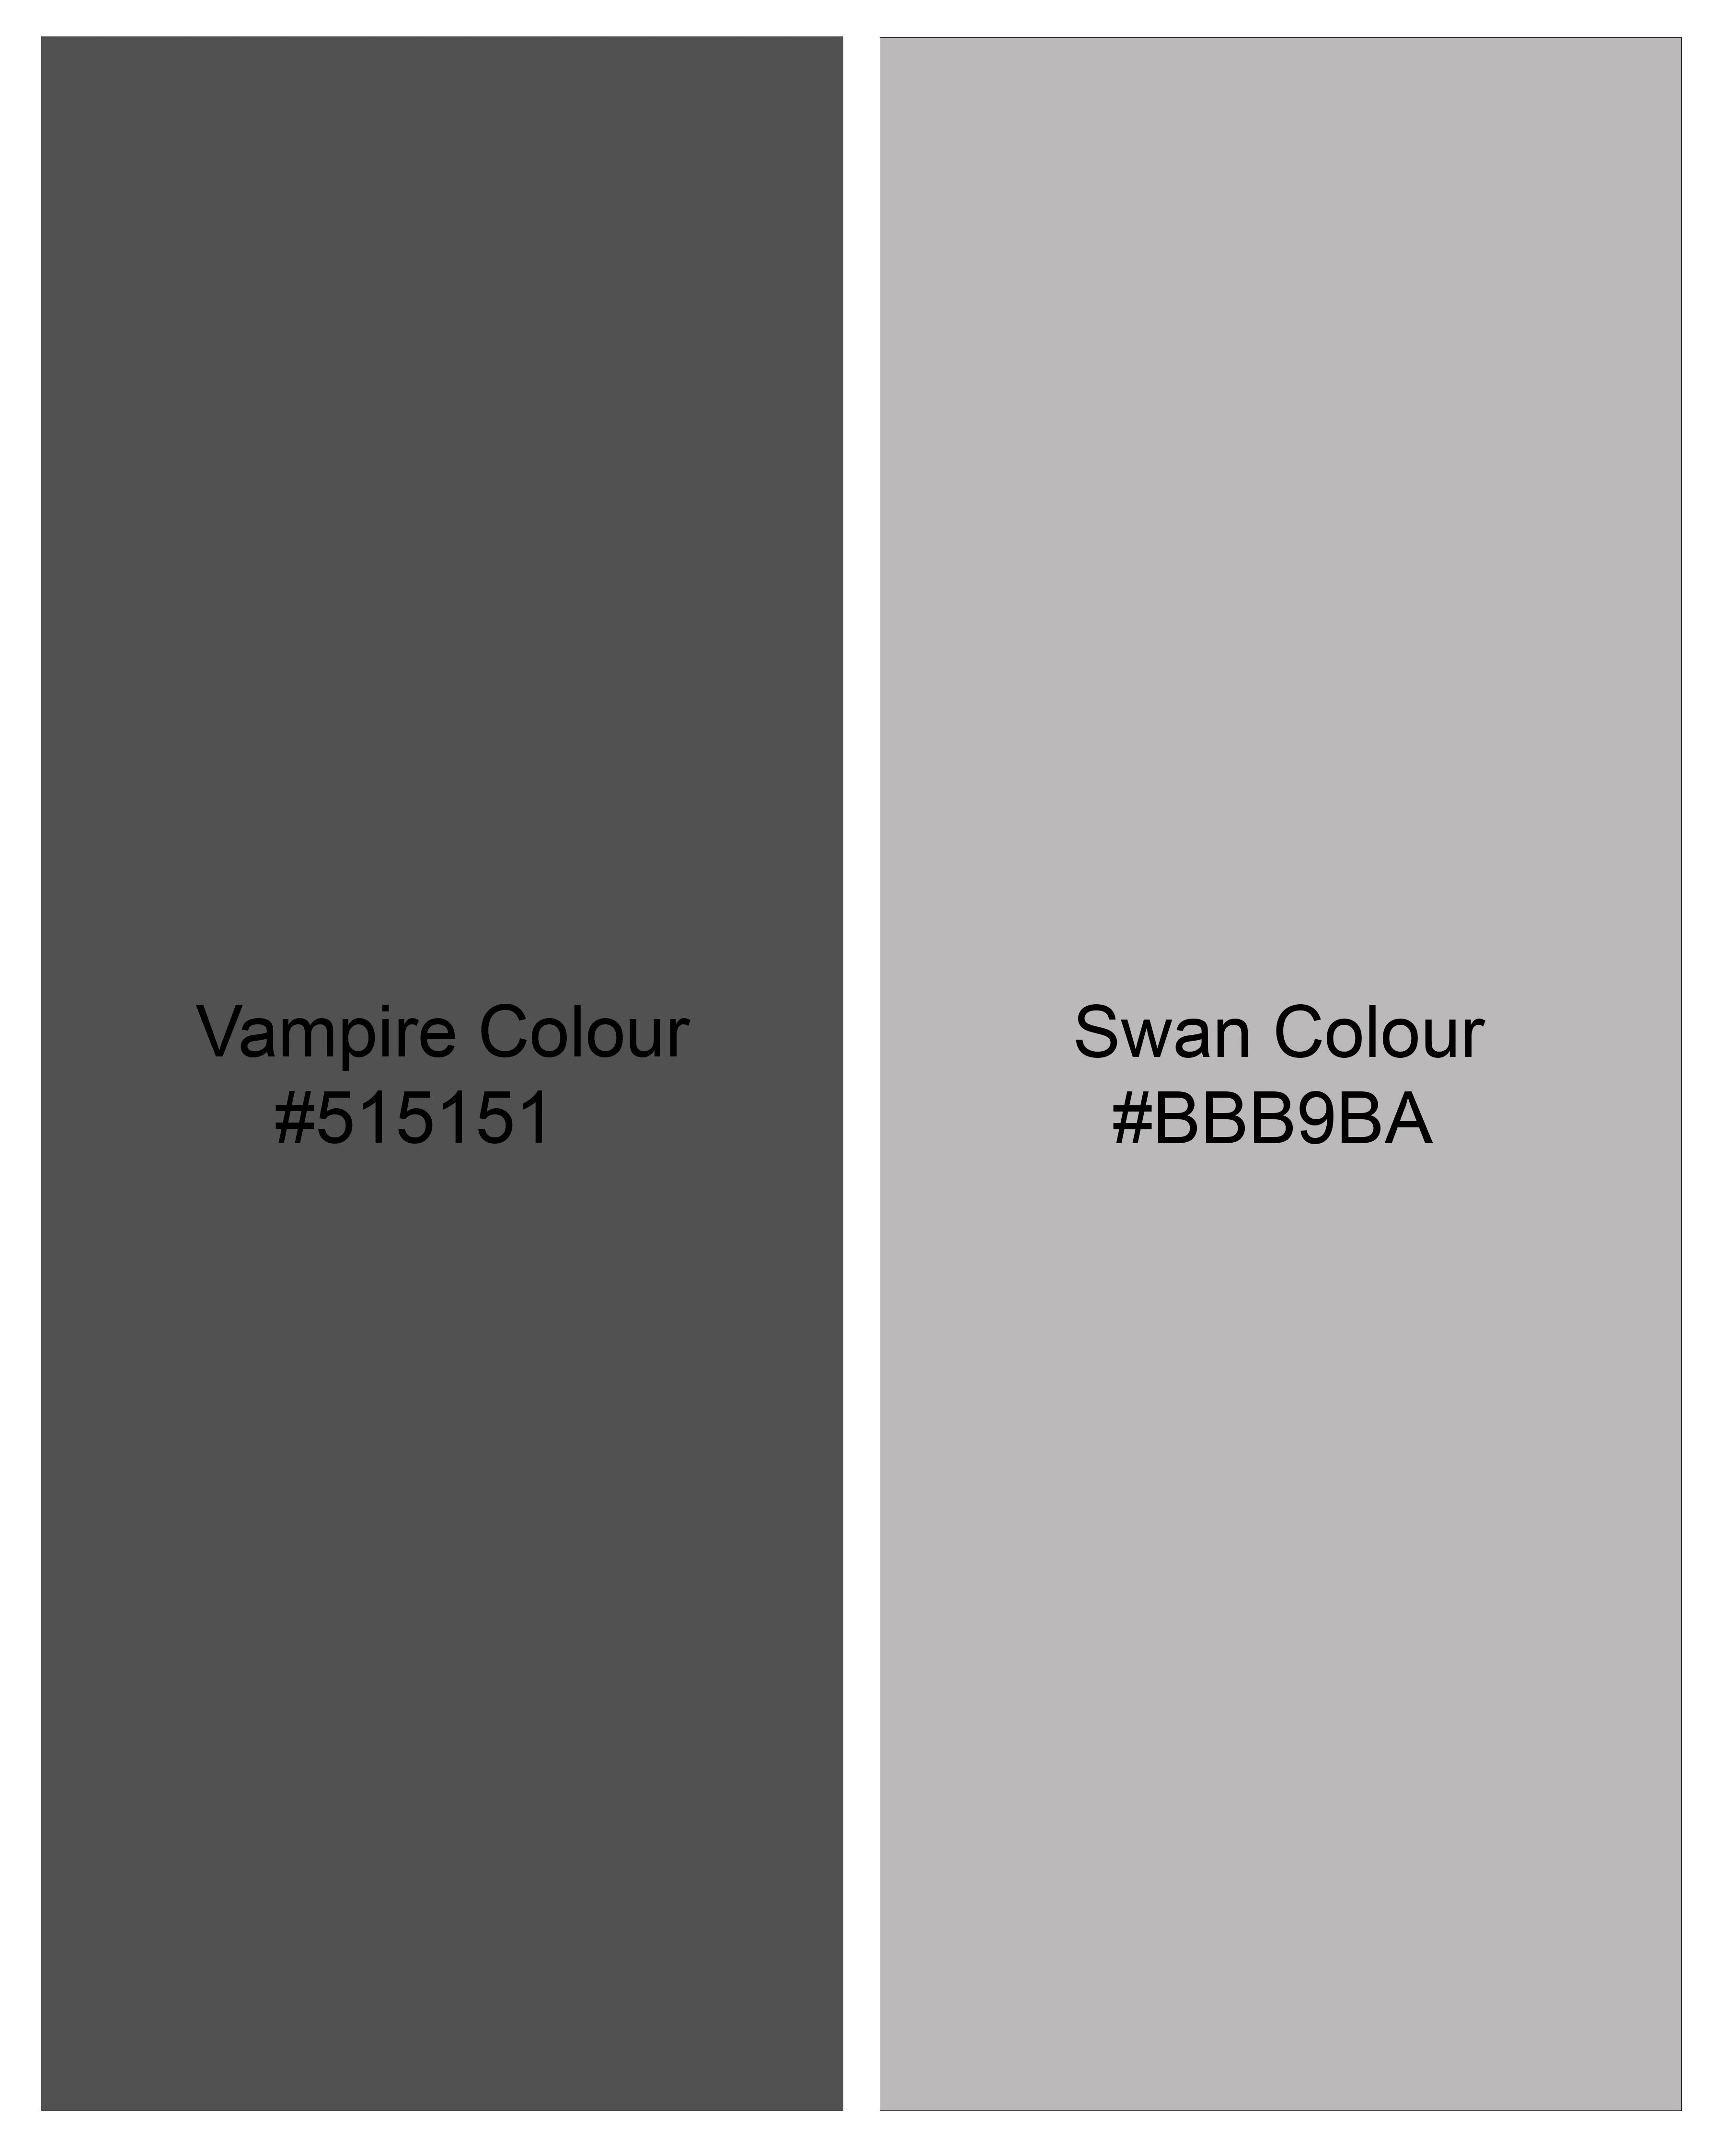 Vampire and Swan Gray Square Printed Super Soft Premium Cotton Shirt